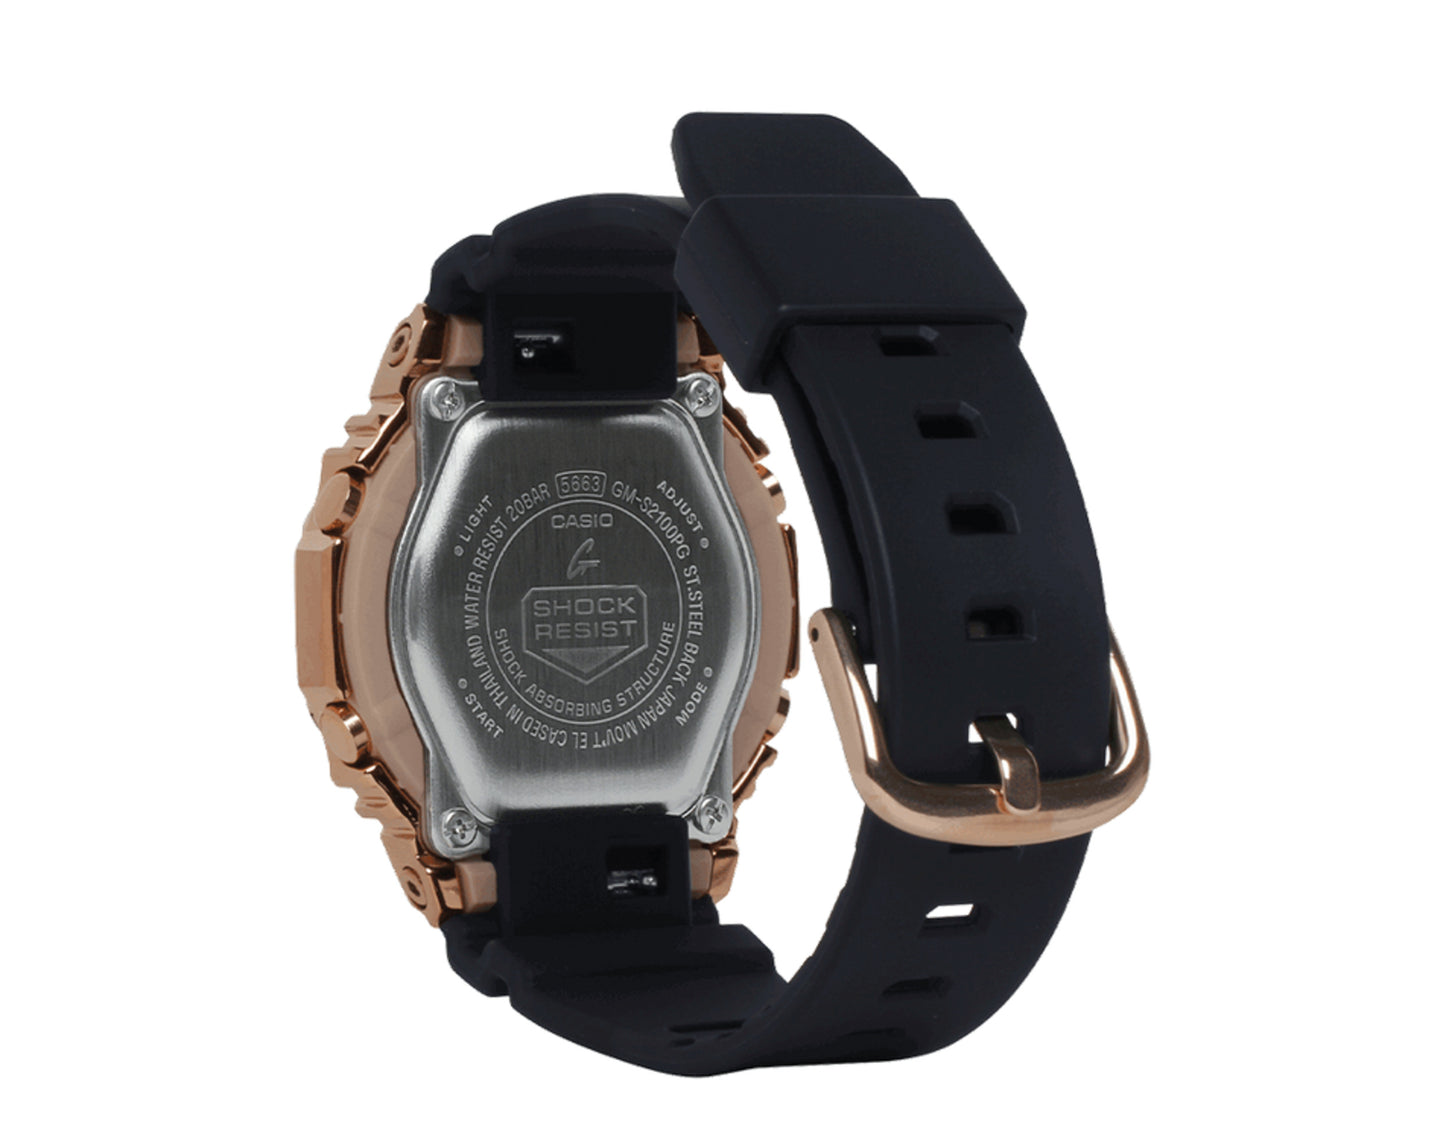 Casio G-Shock GMS2100PG Analog-Digital Metal and Resin Women's Watch